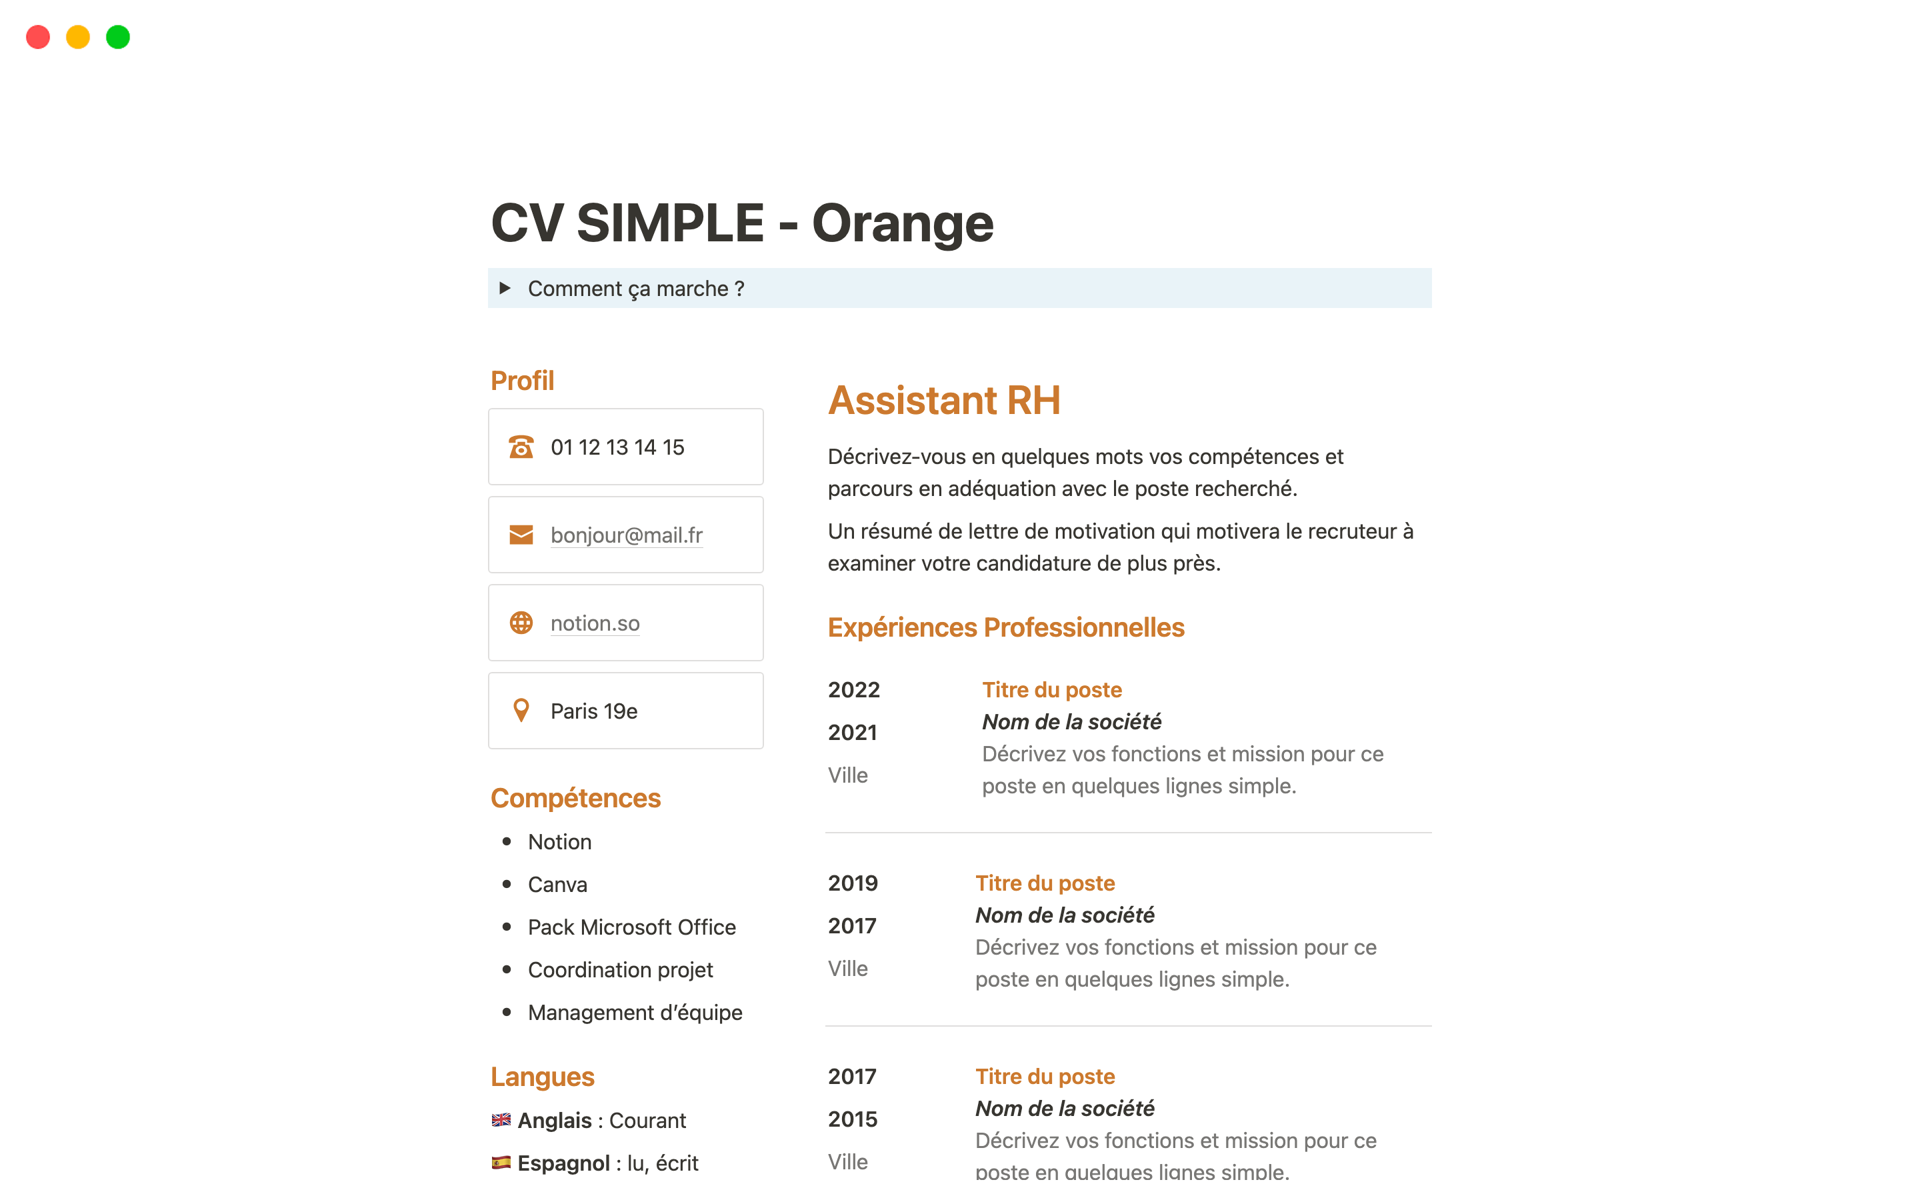 CV SIMPLE - Orange en Françaisのテンプレートのプレビュー